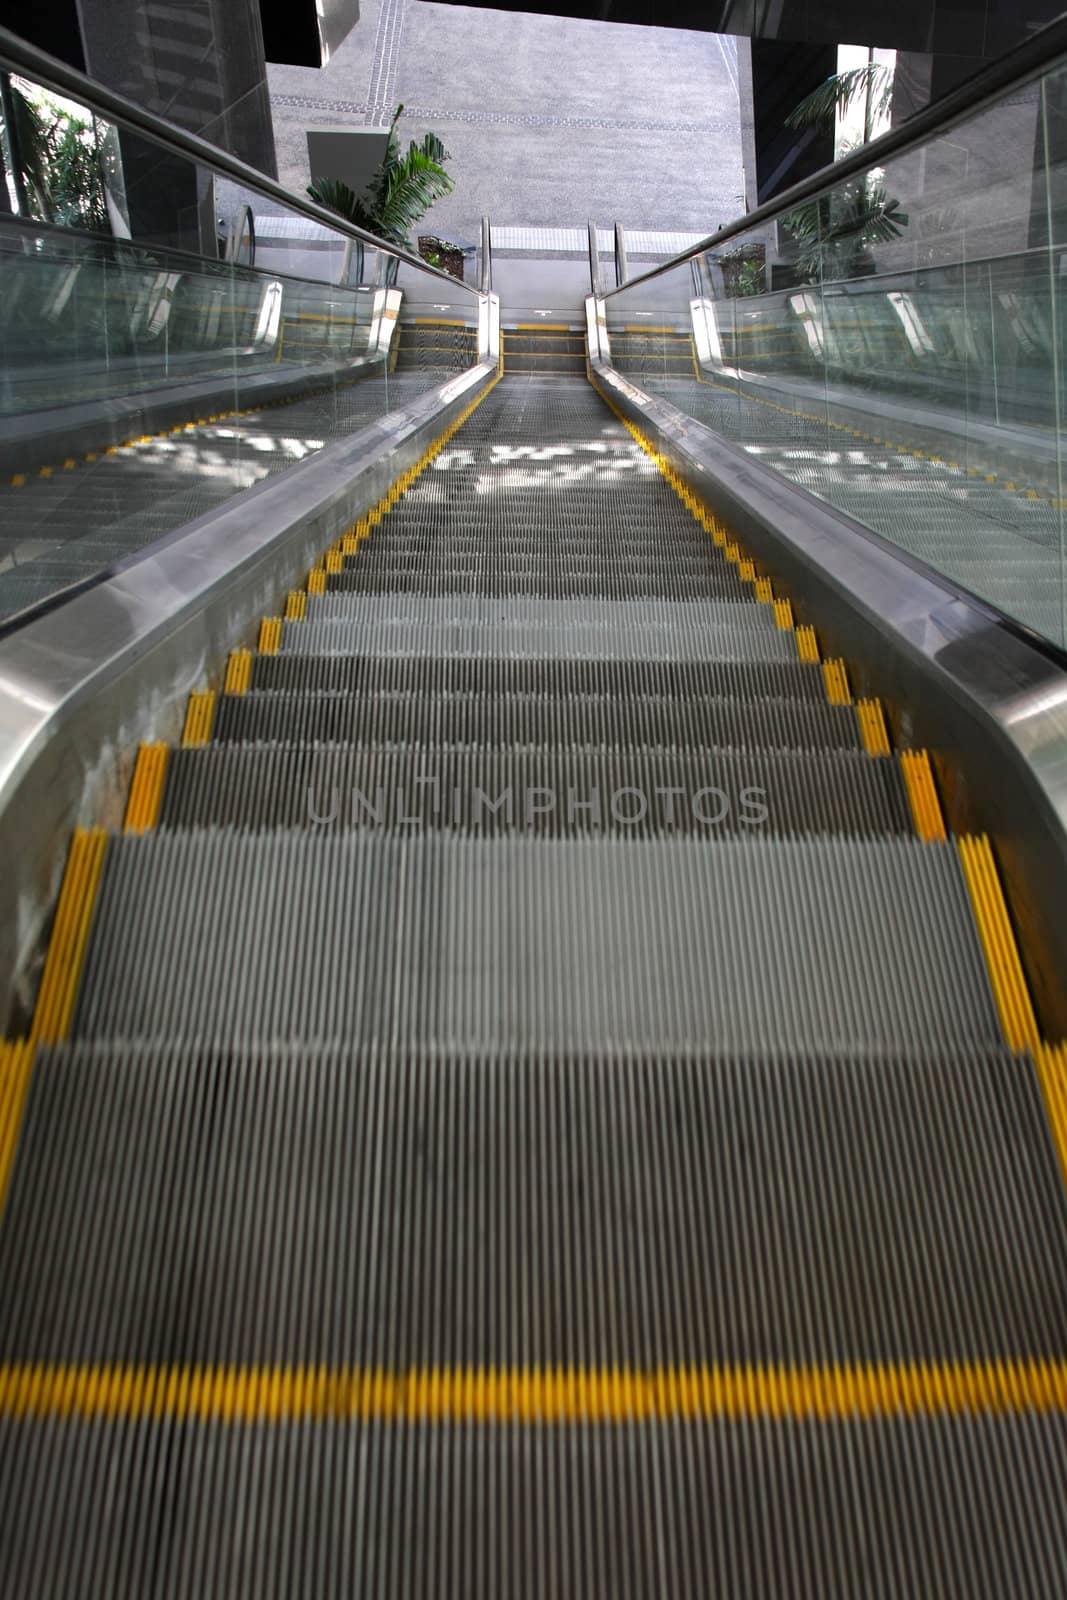 Escalator in a shopping mall